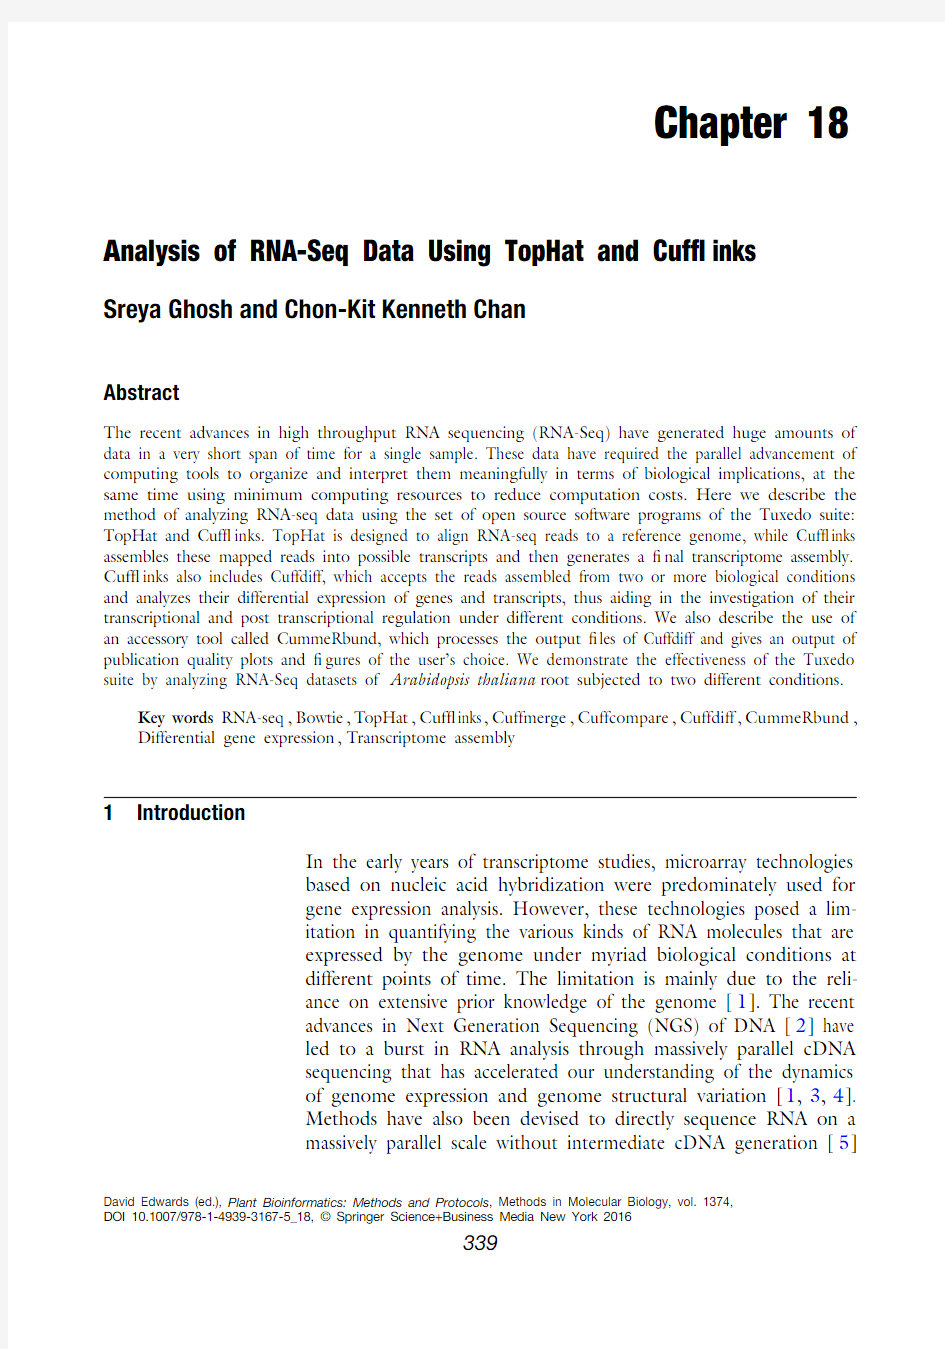 Analysis of RNA-Seq Data Using TopHat and Cufflinks